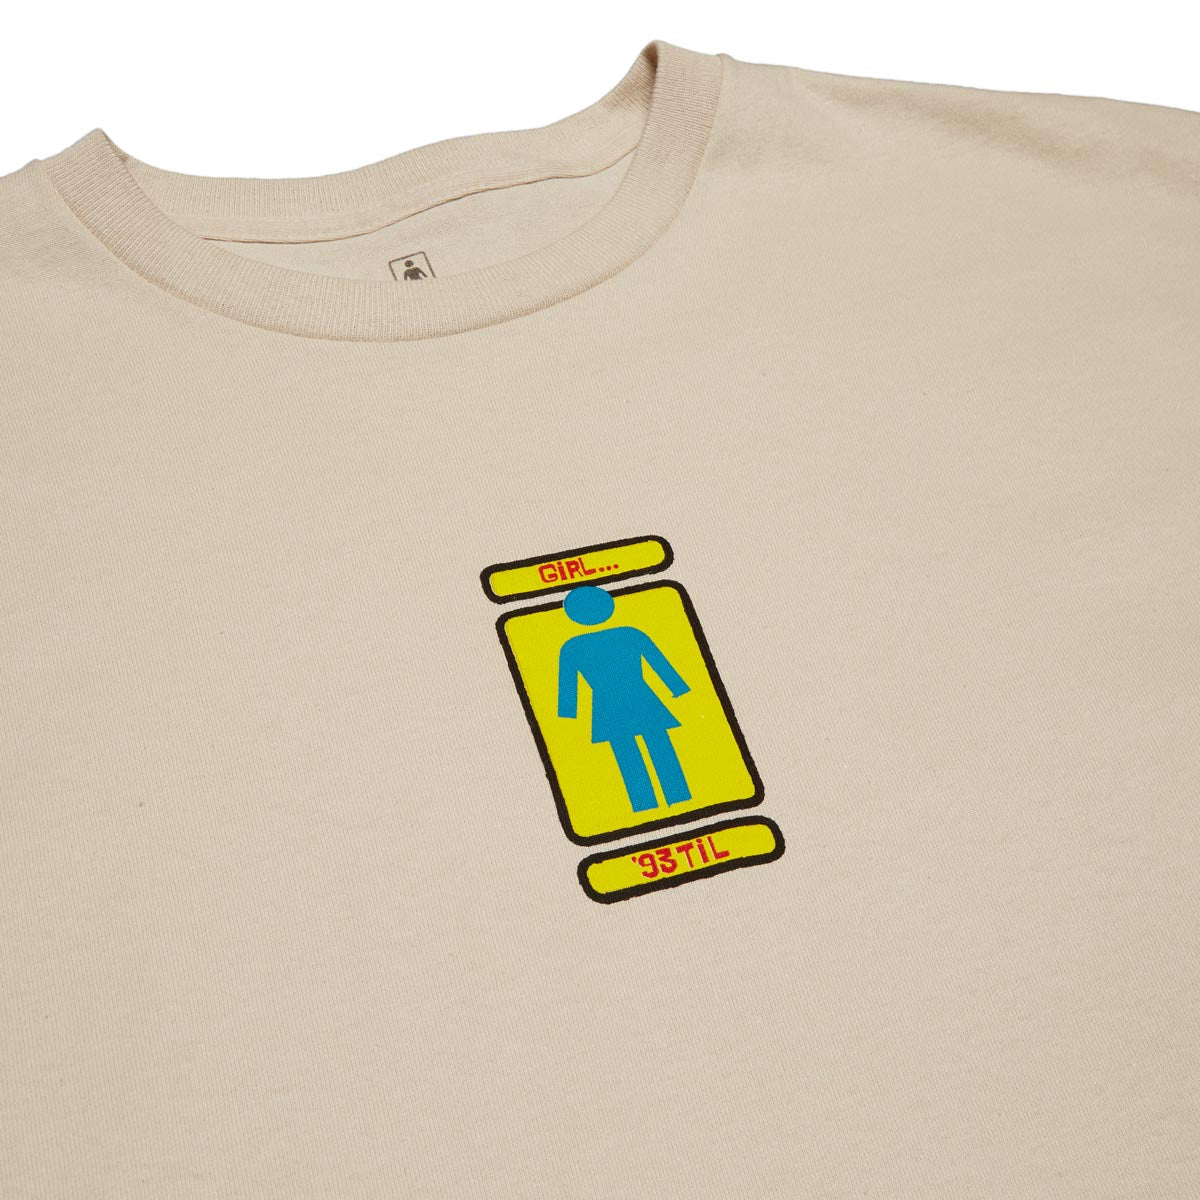 Girl Hand Shakers T-Shirt - Sand image 2